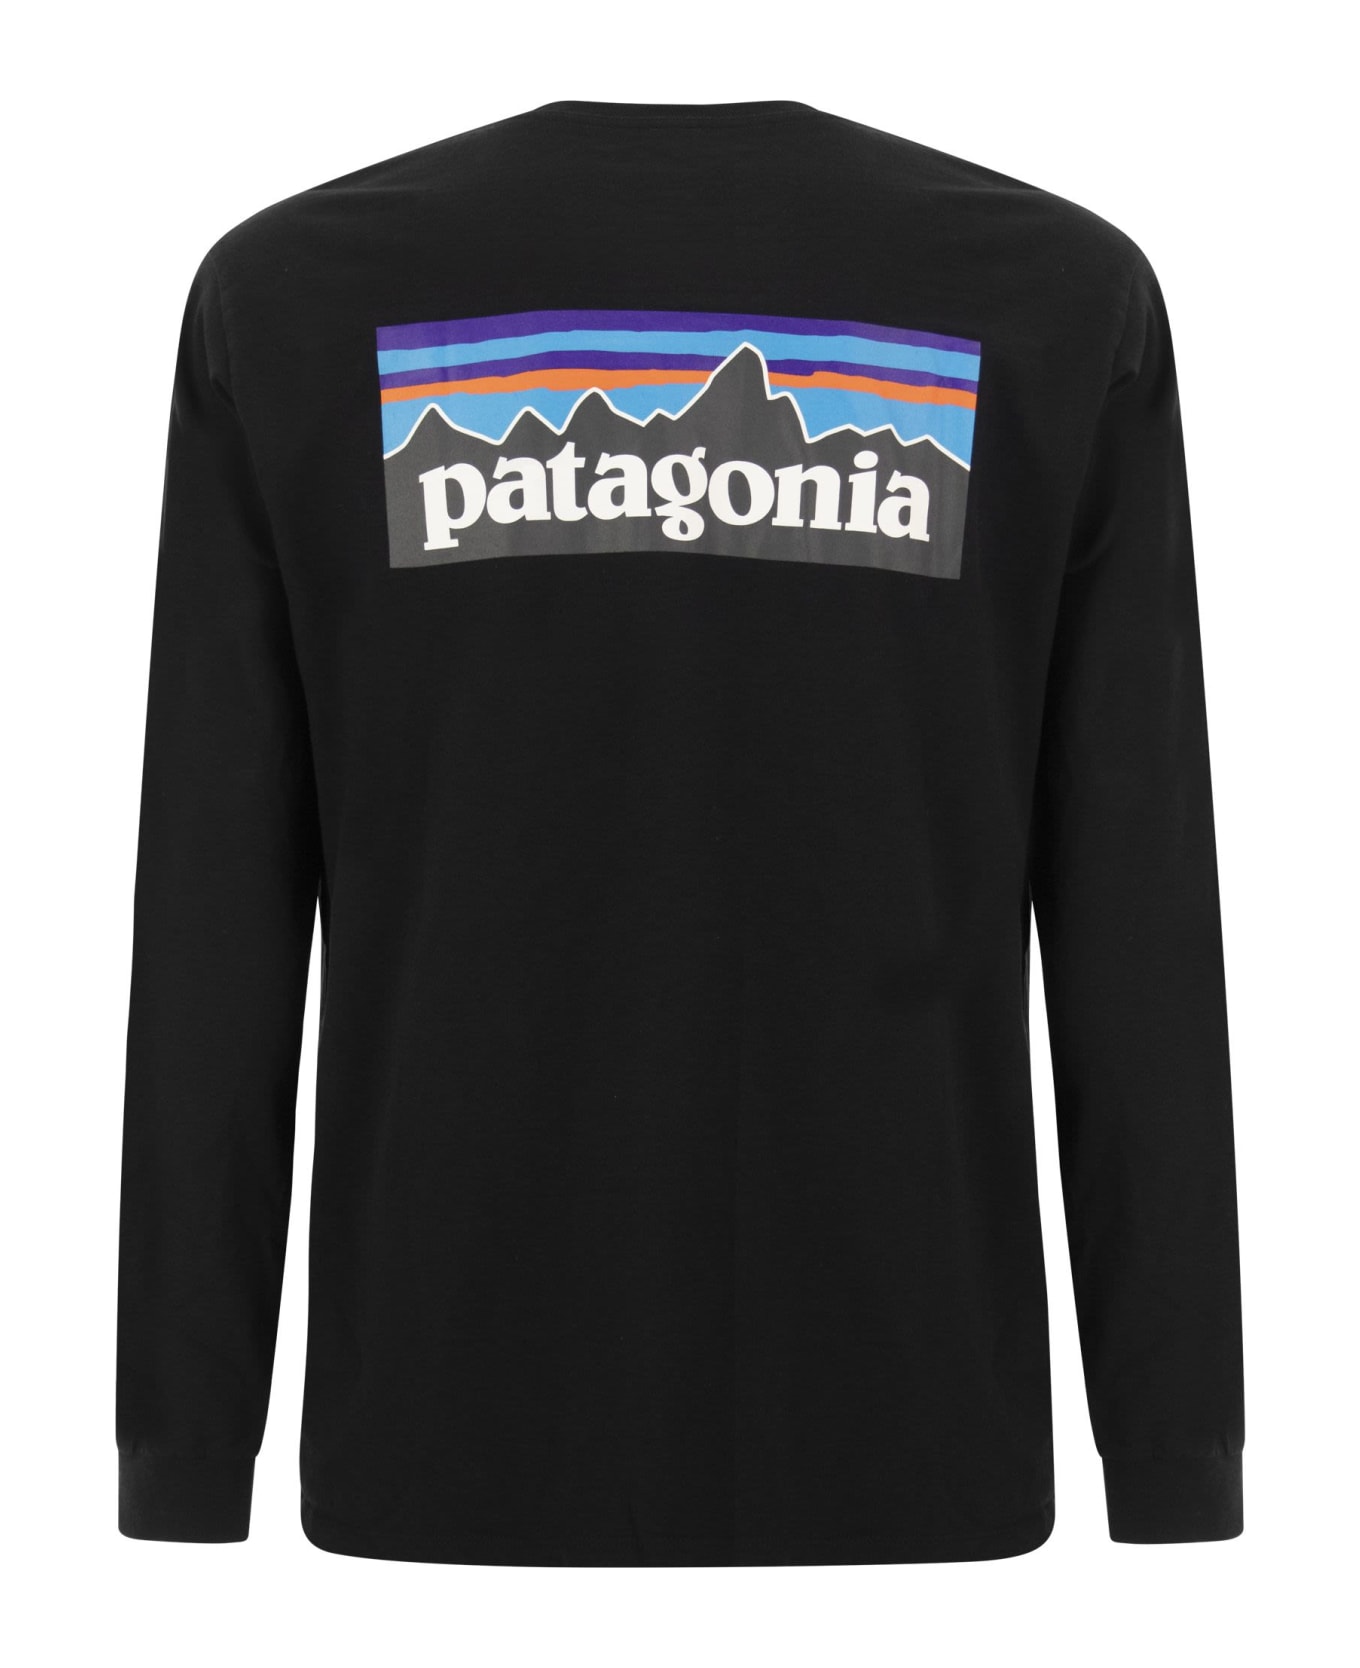 Patagonia T-shirt With Logo Long Sleeves - Black